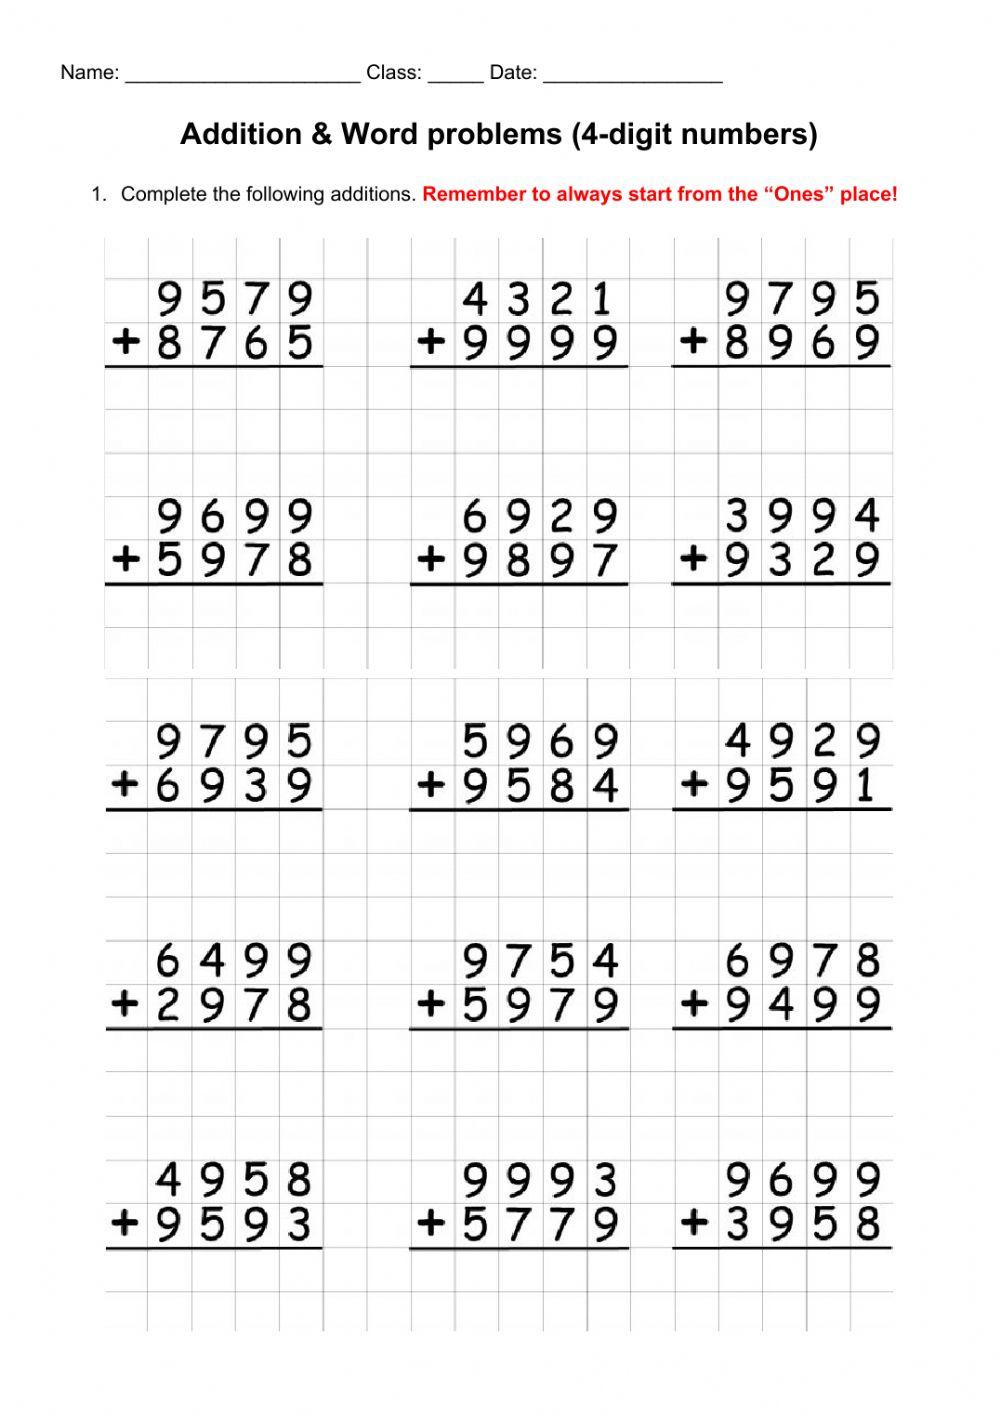 4 digit addition & word problems